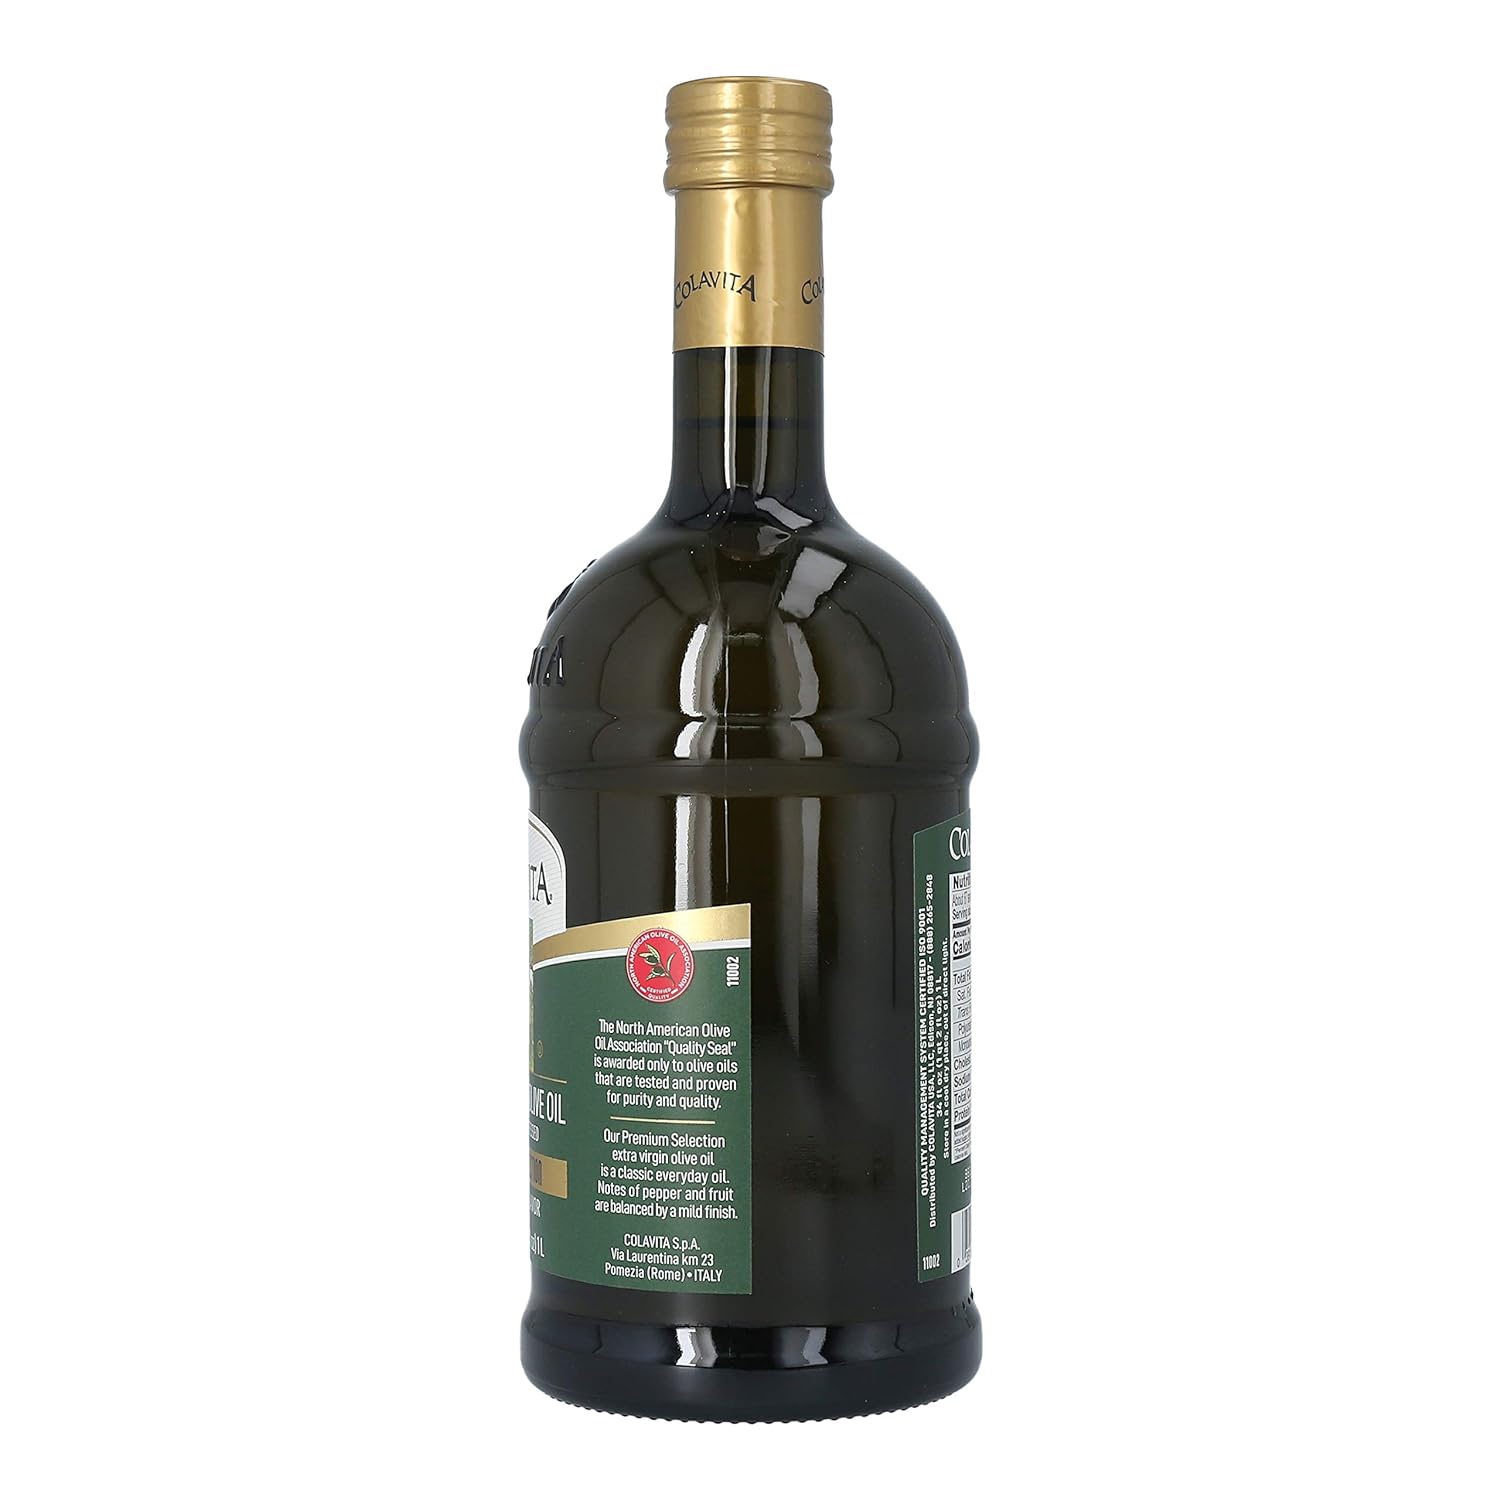 Colavita Premium Selection Extra Virgin Olive Oil - 34 Fl Oz, Single Bottle : Grocery & Gourmet Food